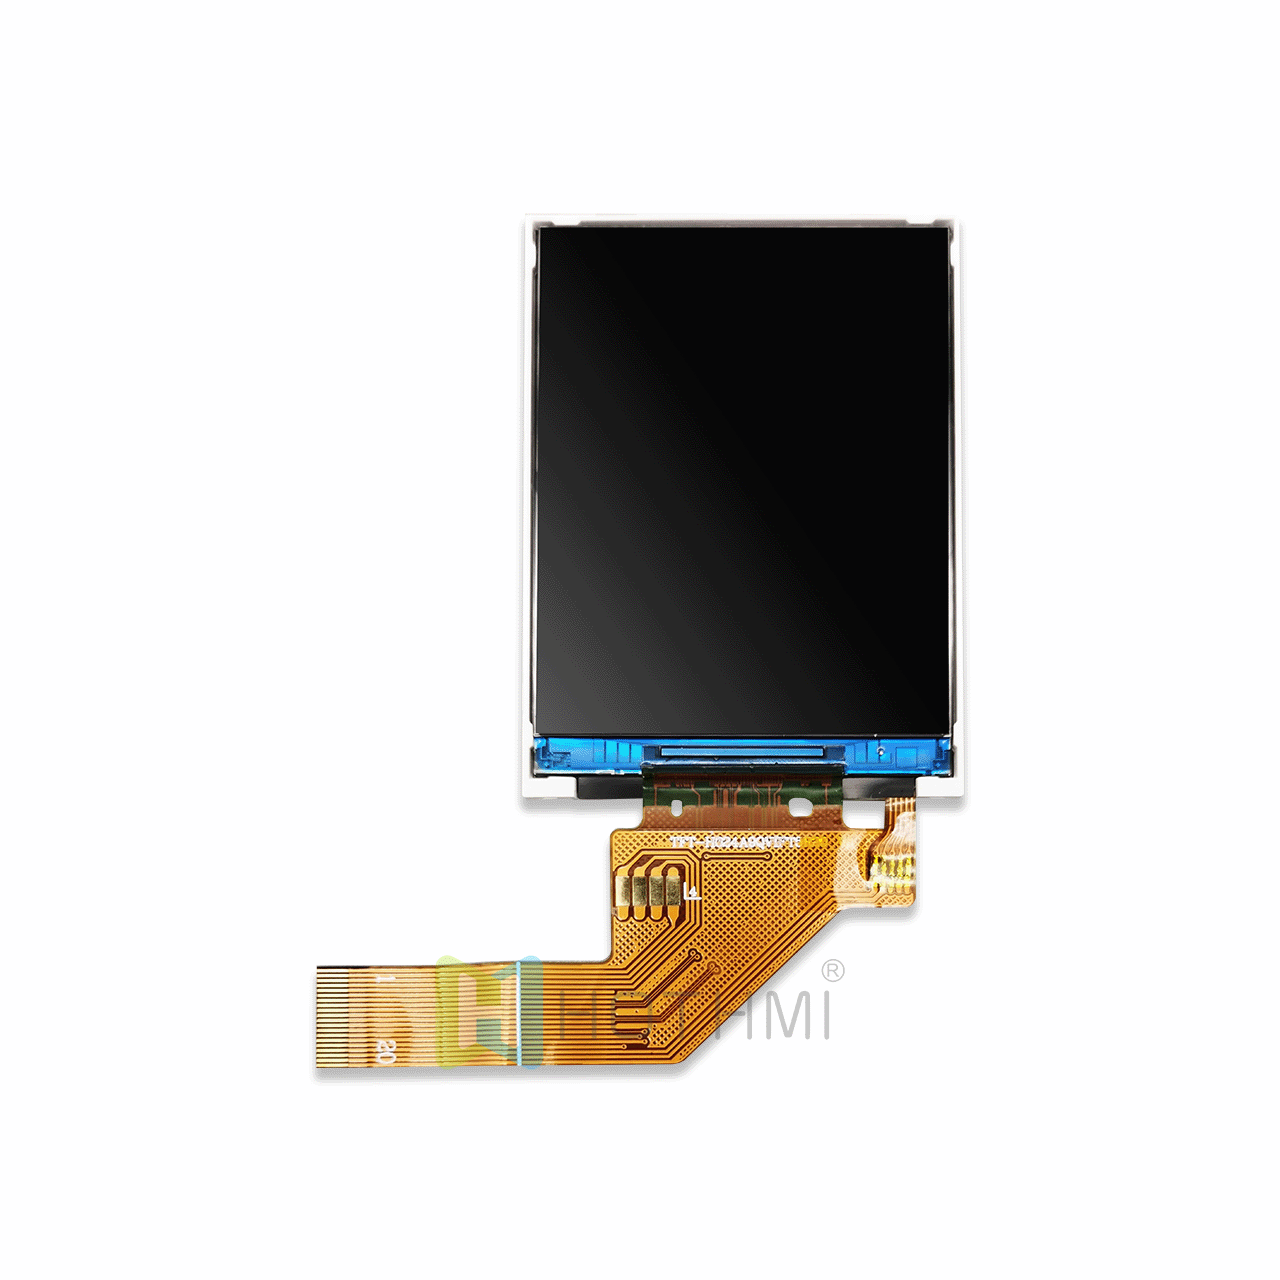 2.4-inch TFT LCD module/IPS/240x320 dot matrix pixels/plug-in FPC/JD9852/MIPI DSI/sunlight readable